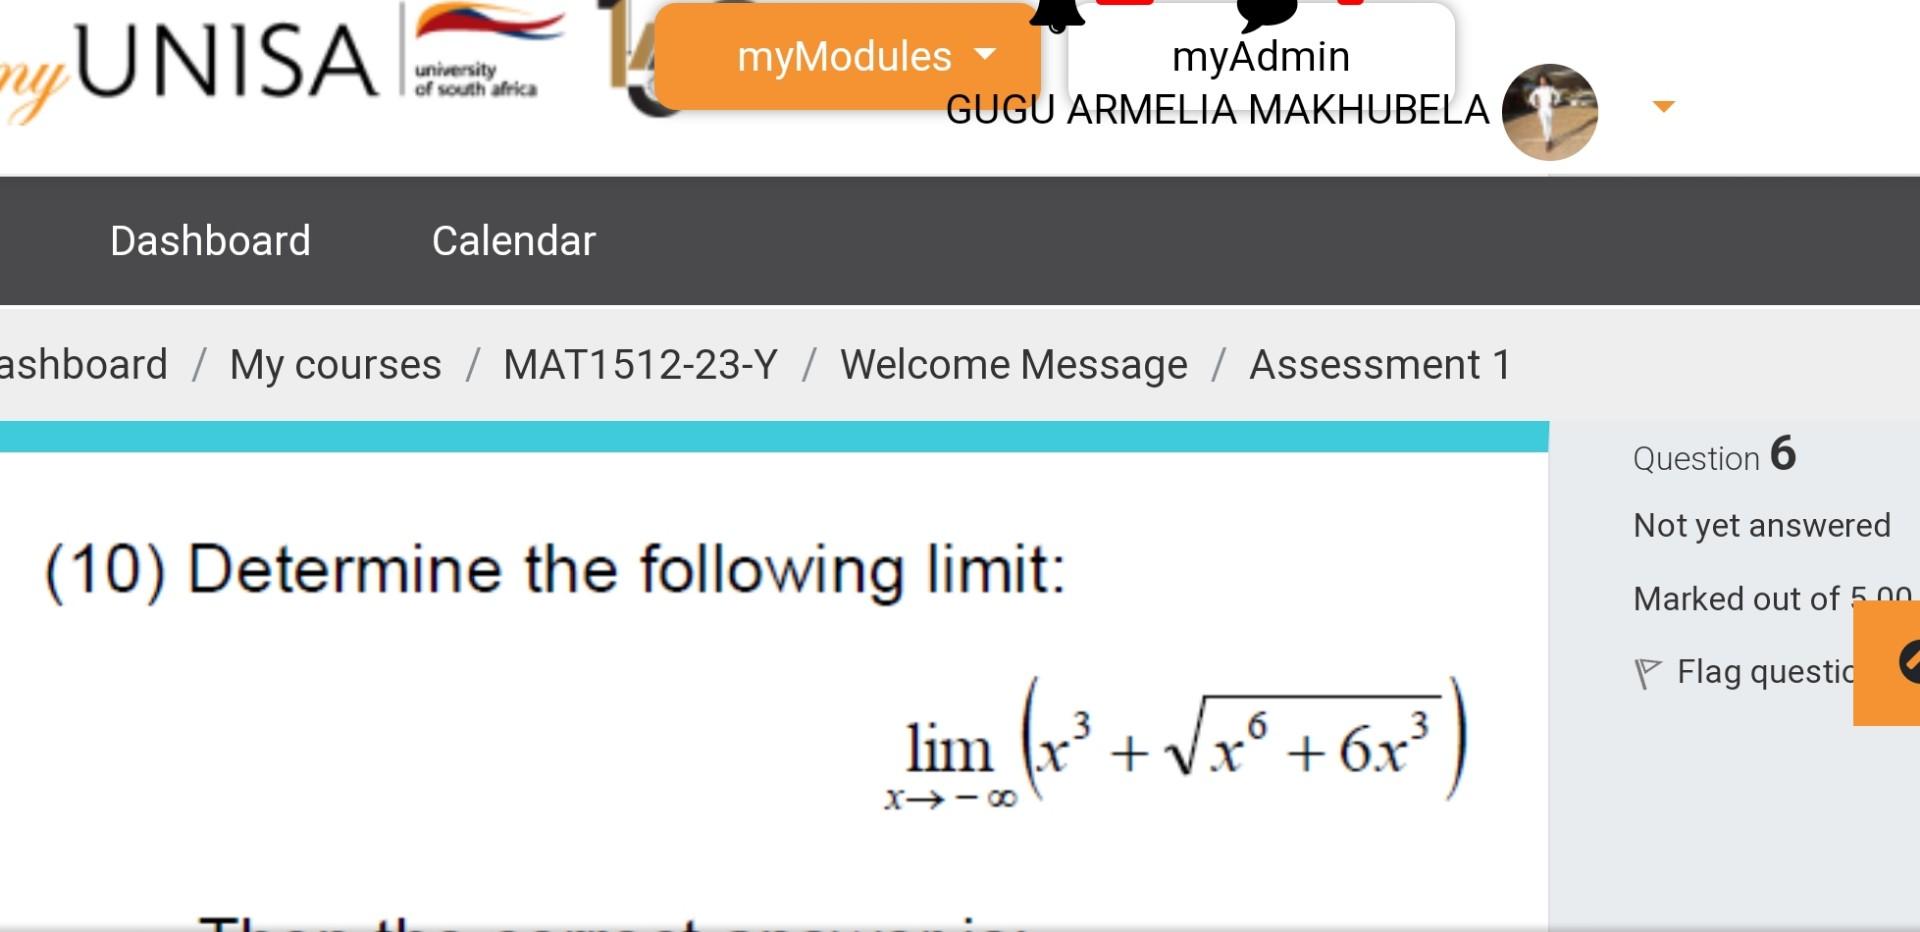 (10) Determine the following limit:
\[
\lim _{x \rightarrow-\infty}\left(x^{3}+\sqrt{x^{6}+6 x^{3}}\right)
\]
\[
\begin{array